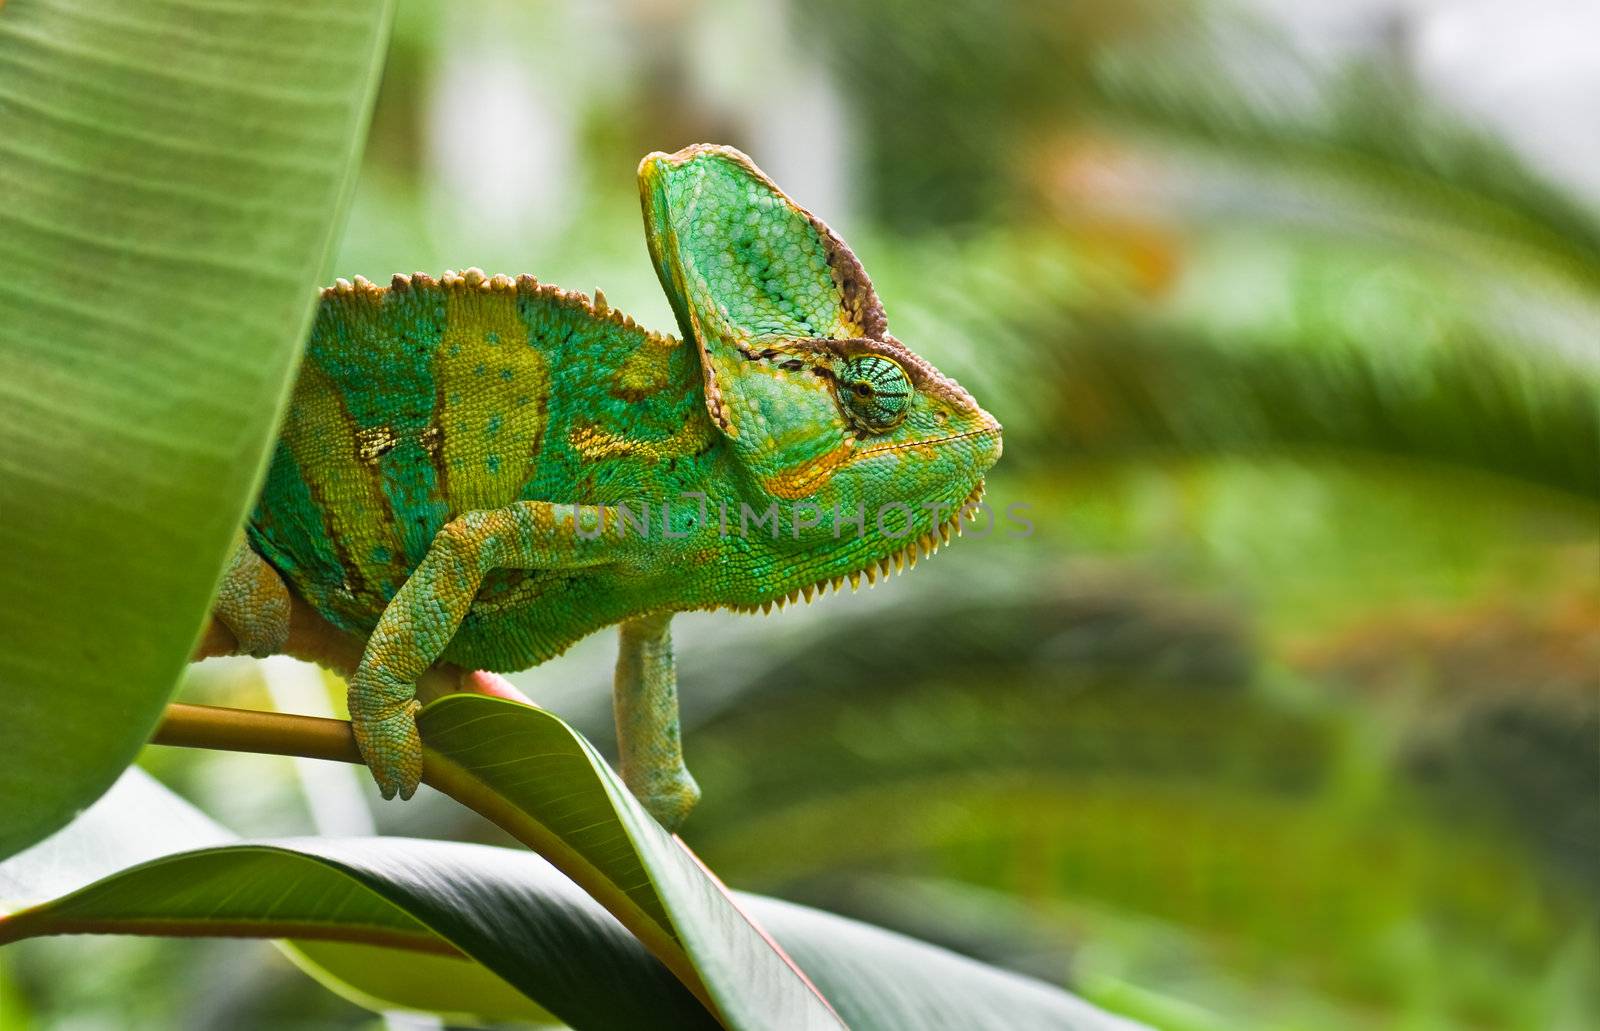 Green Jemenchameleon or Chamaelio calyptratus by Colette